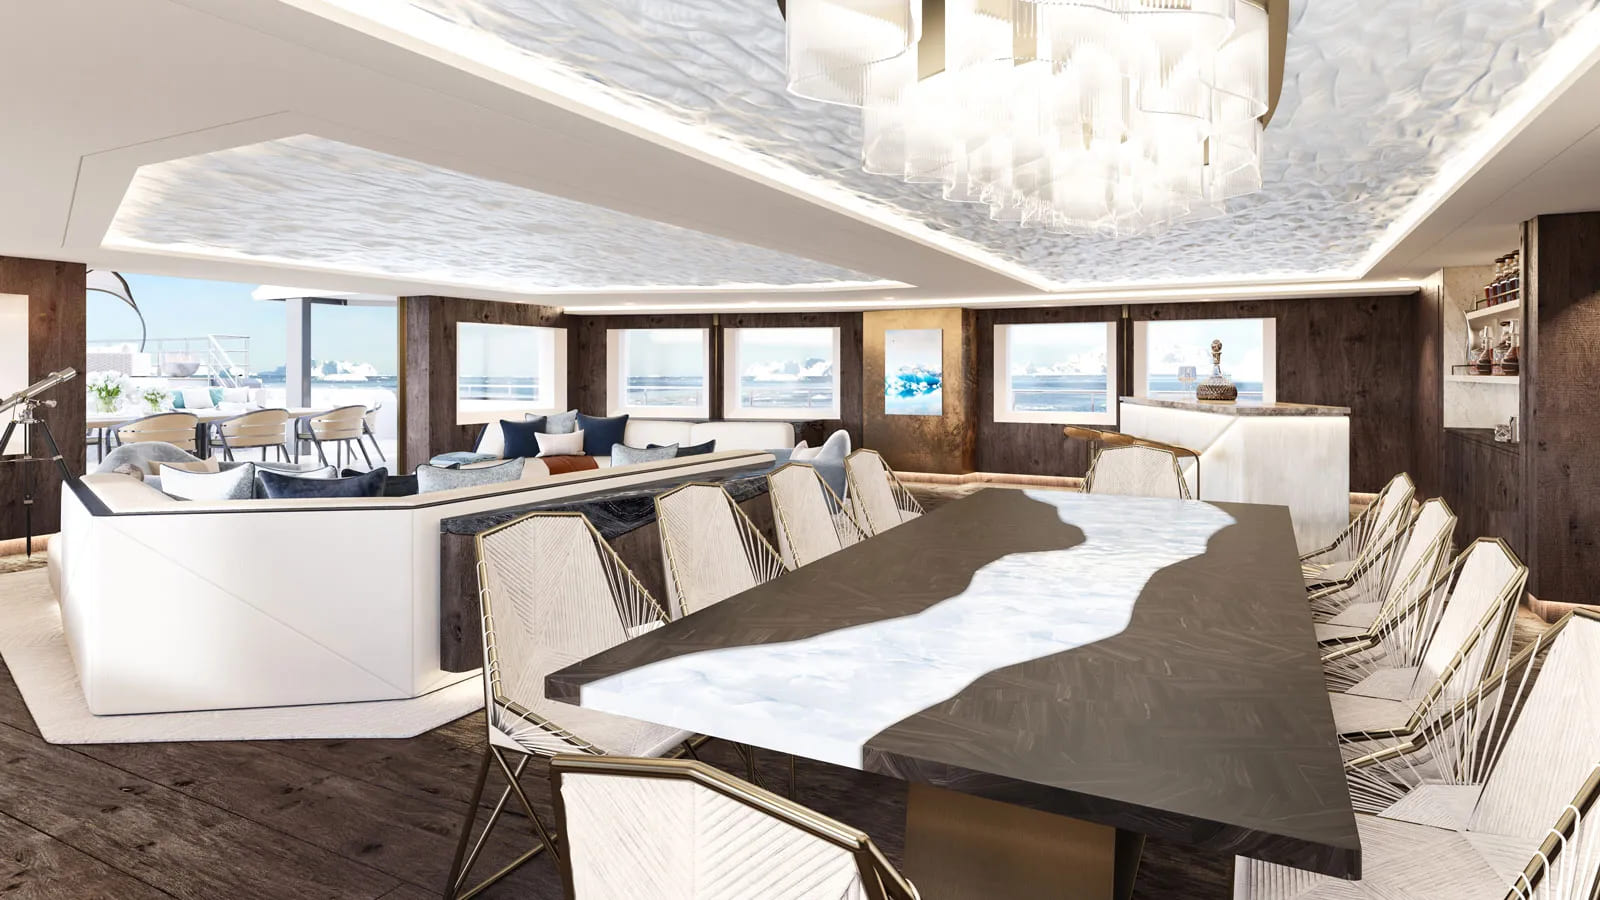 Damen Yachting SeaXplorer 77 novo design - boat shopping